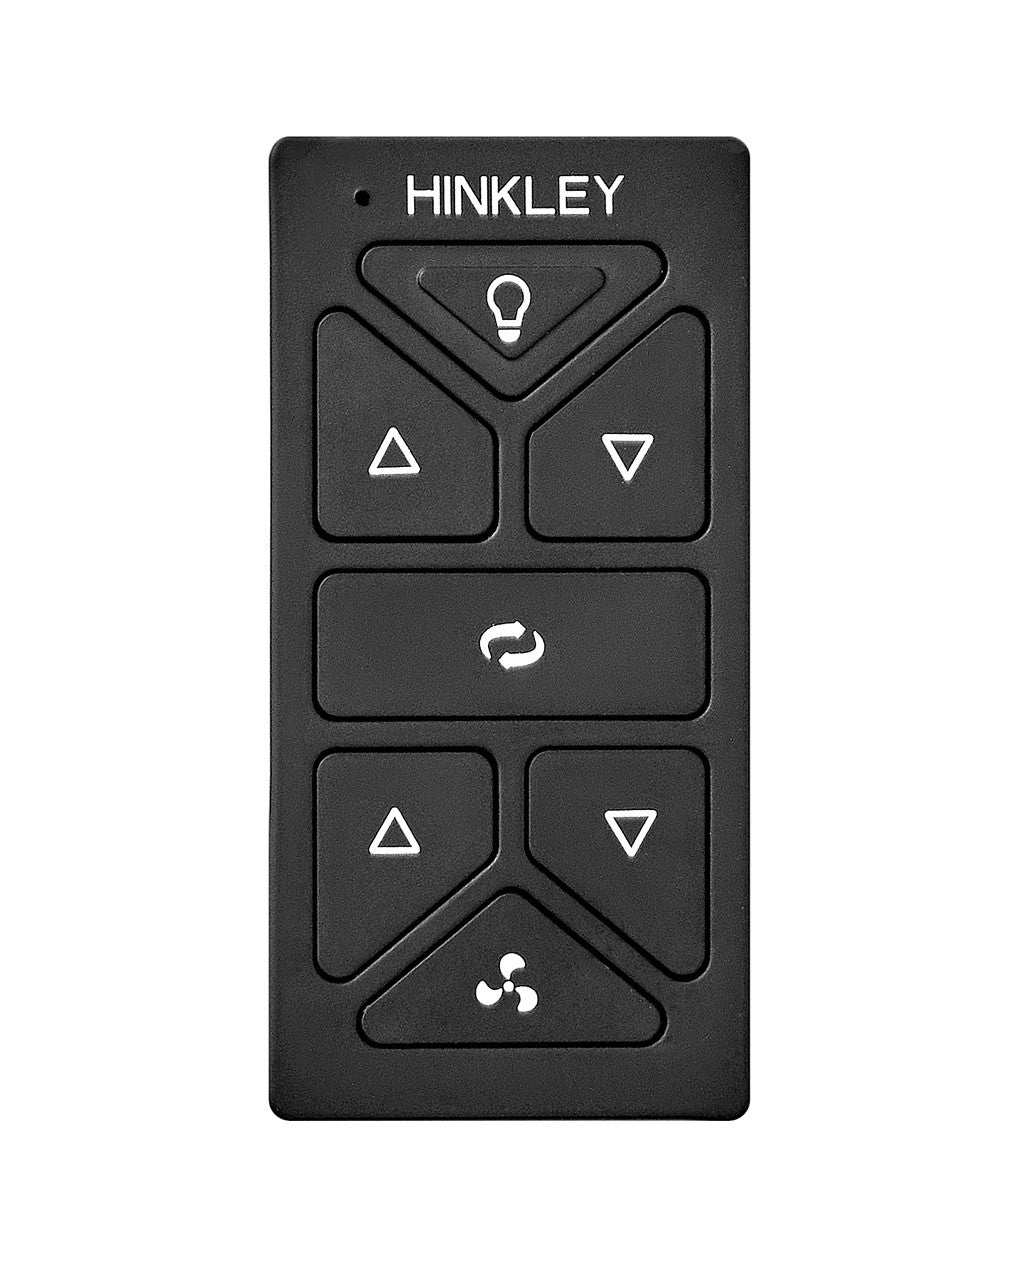 Hinkley - 980014FBK-R - Fan Control - Hiro Control Reversing - Black